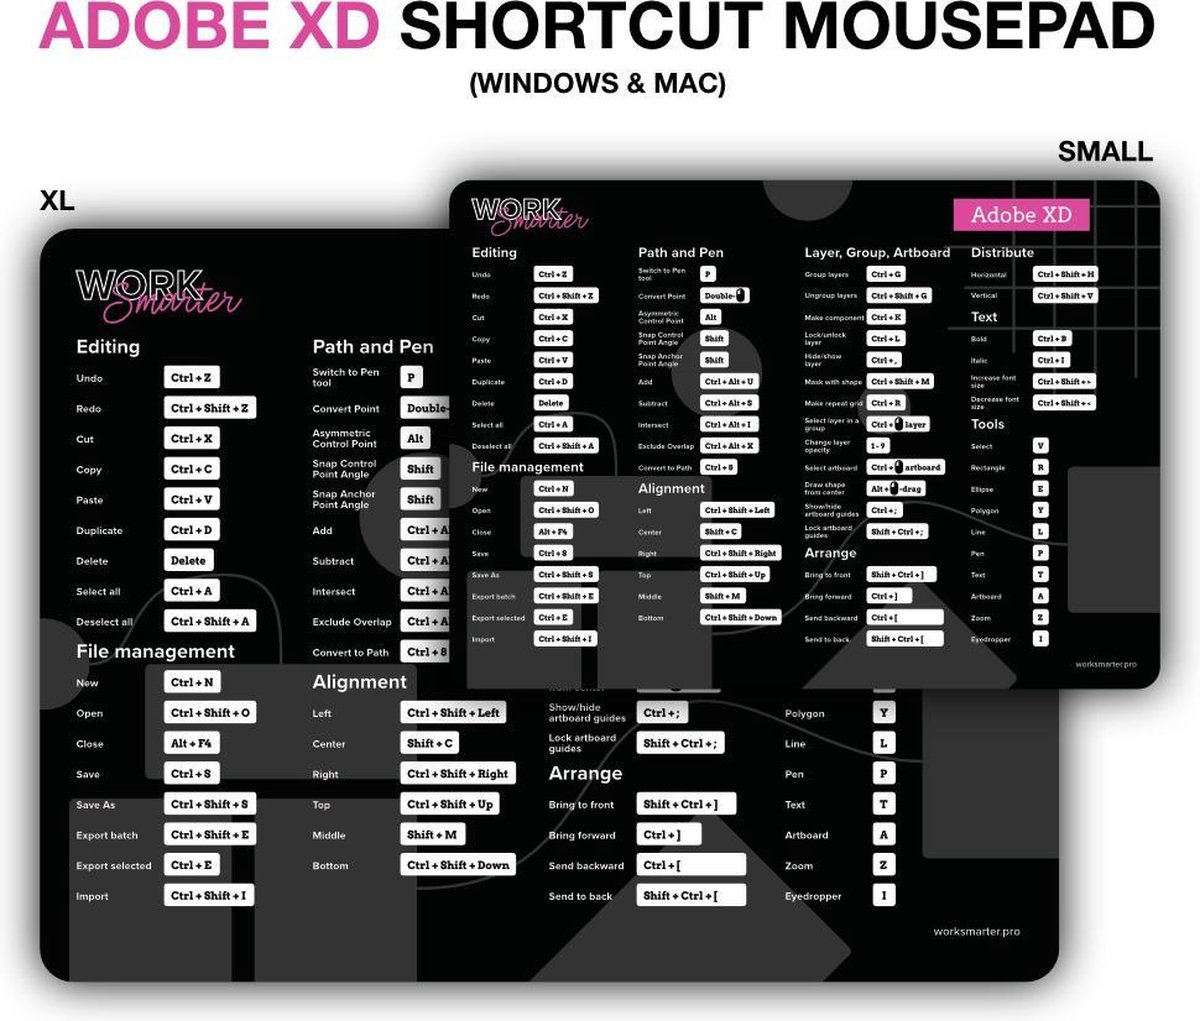 Adobe XD Shortcut Mousepad - Normal - Windows